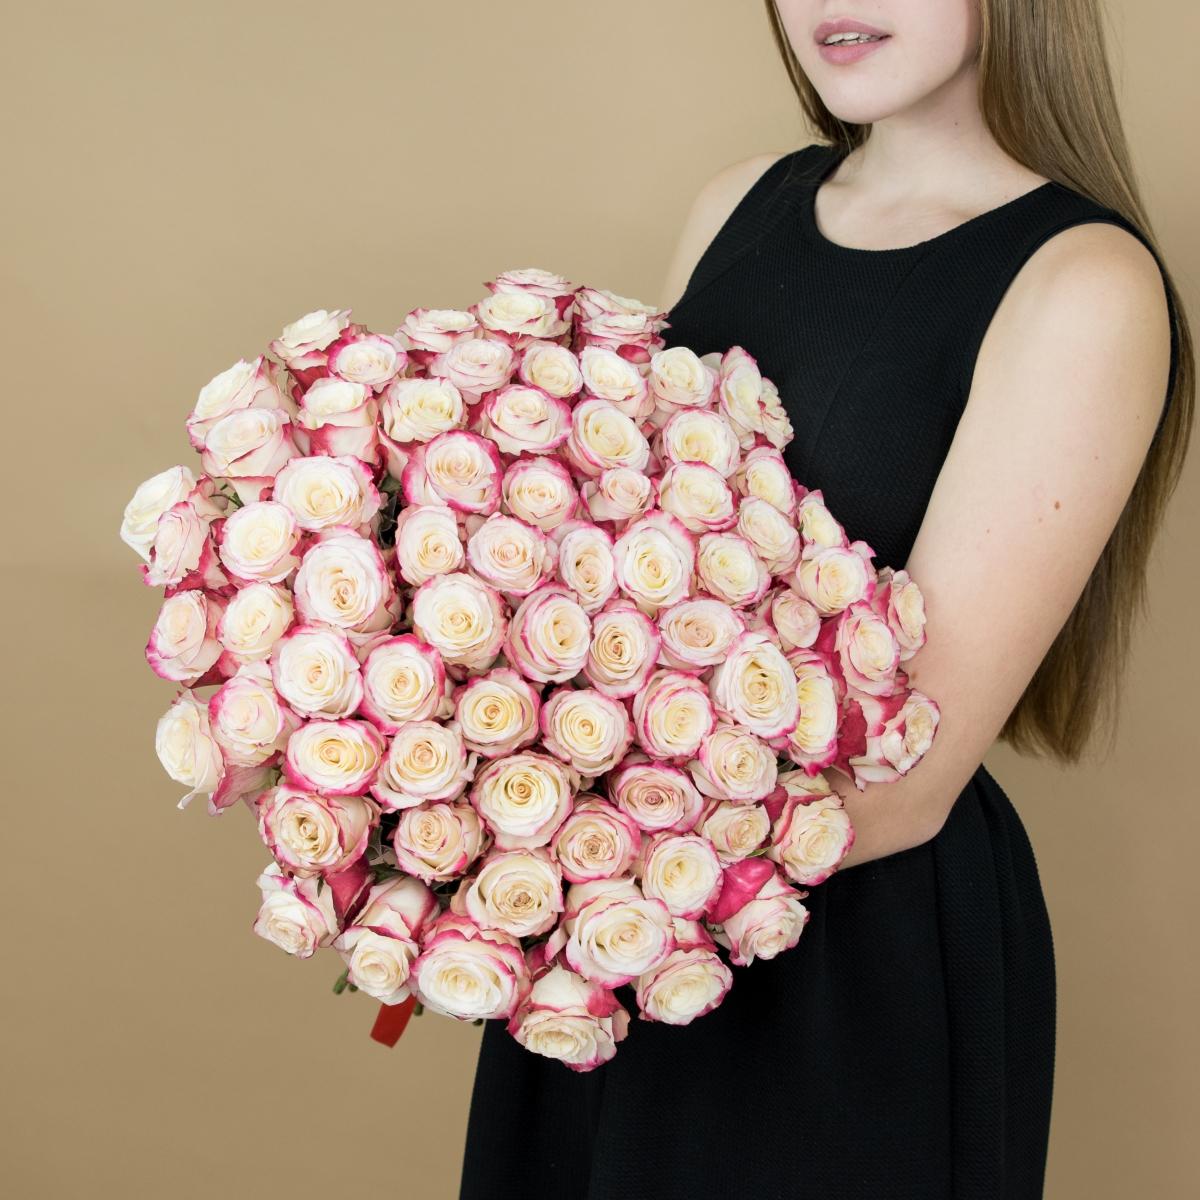 Розы красно-белые (40 см) Эквадор артикул букета: 477